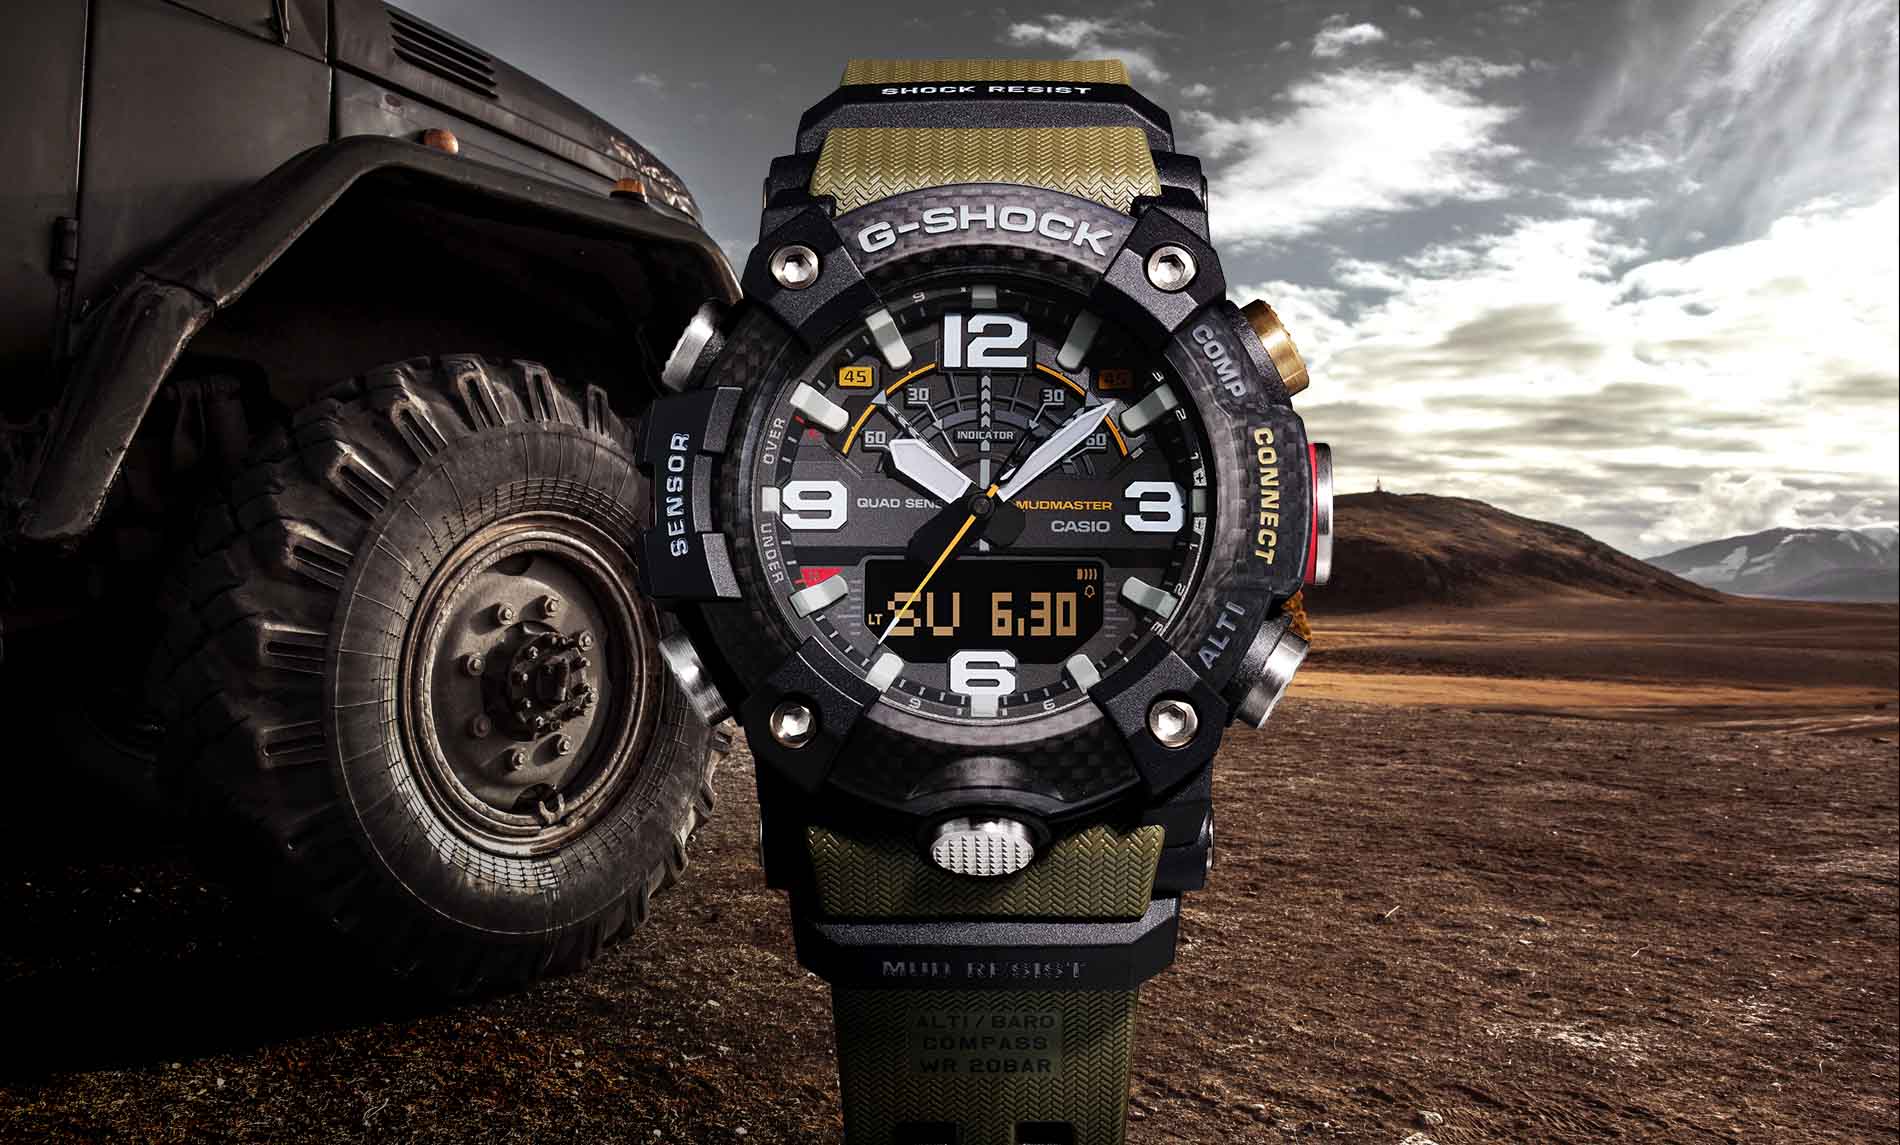 G-Shock-GG-B100-Mudmaster-Outdoor-Watch.jpg